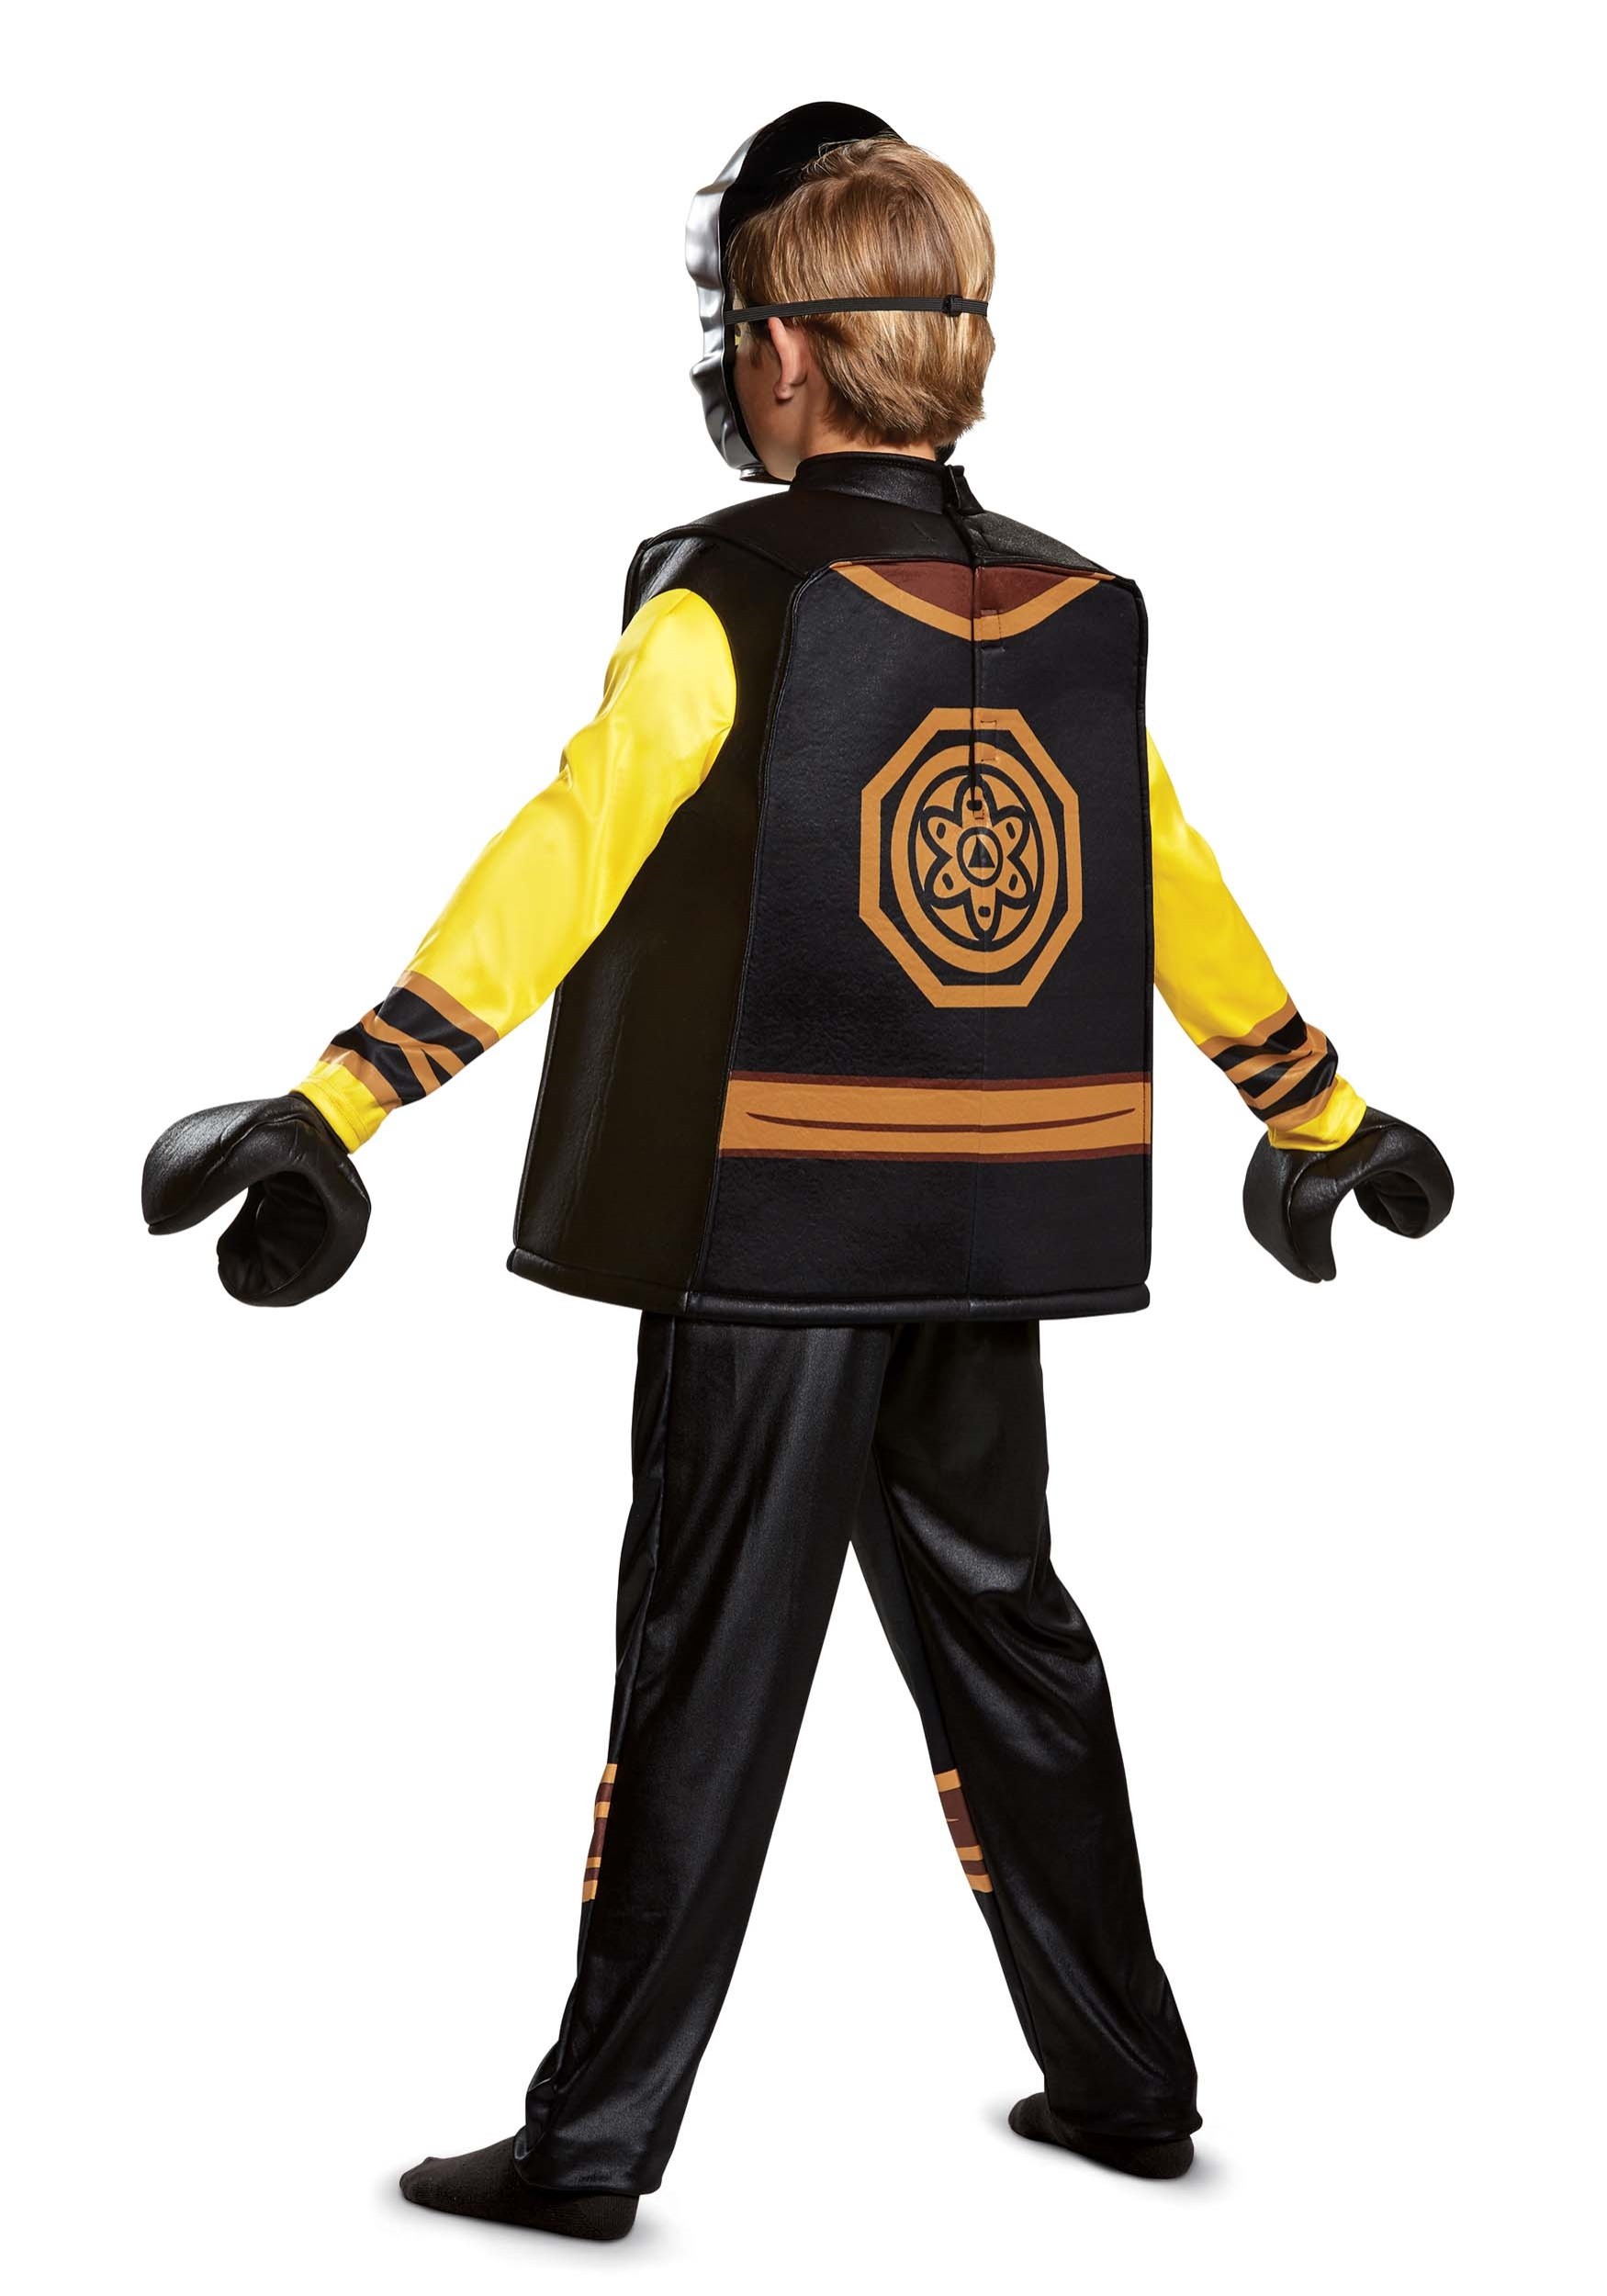 Cole Prestige Lego Ninjago Movie Fancy Dress Up Halloween Deluxe Child Costume